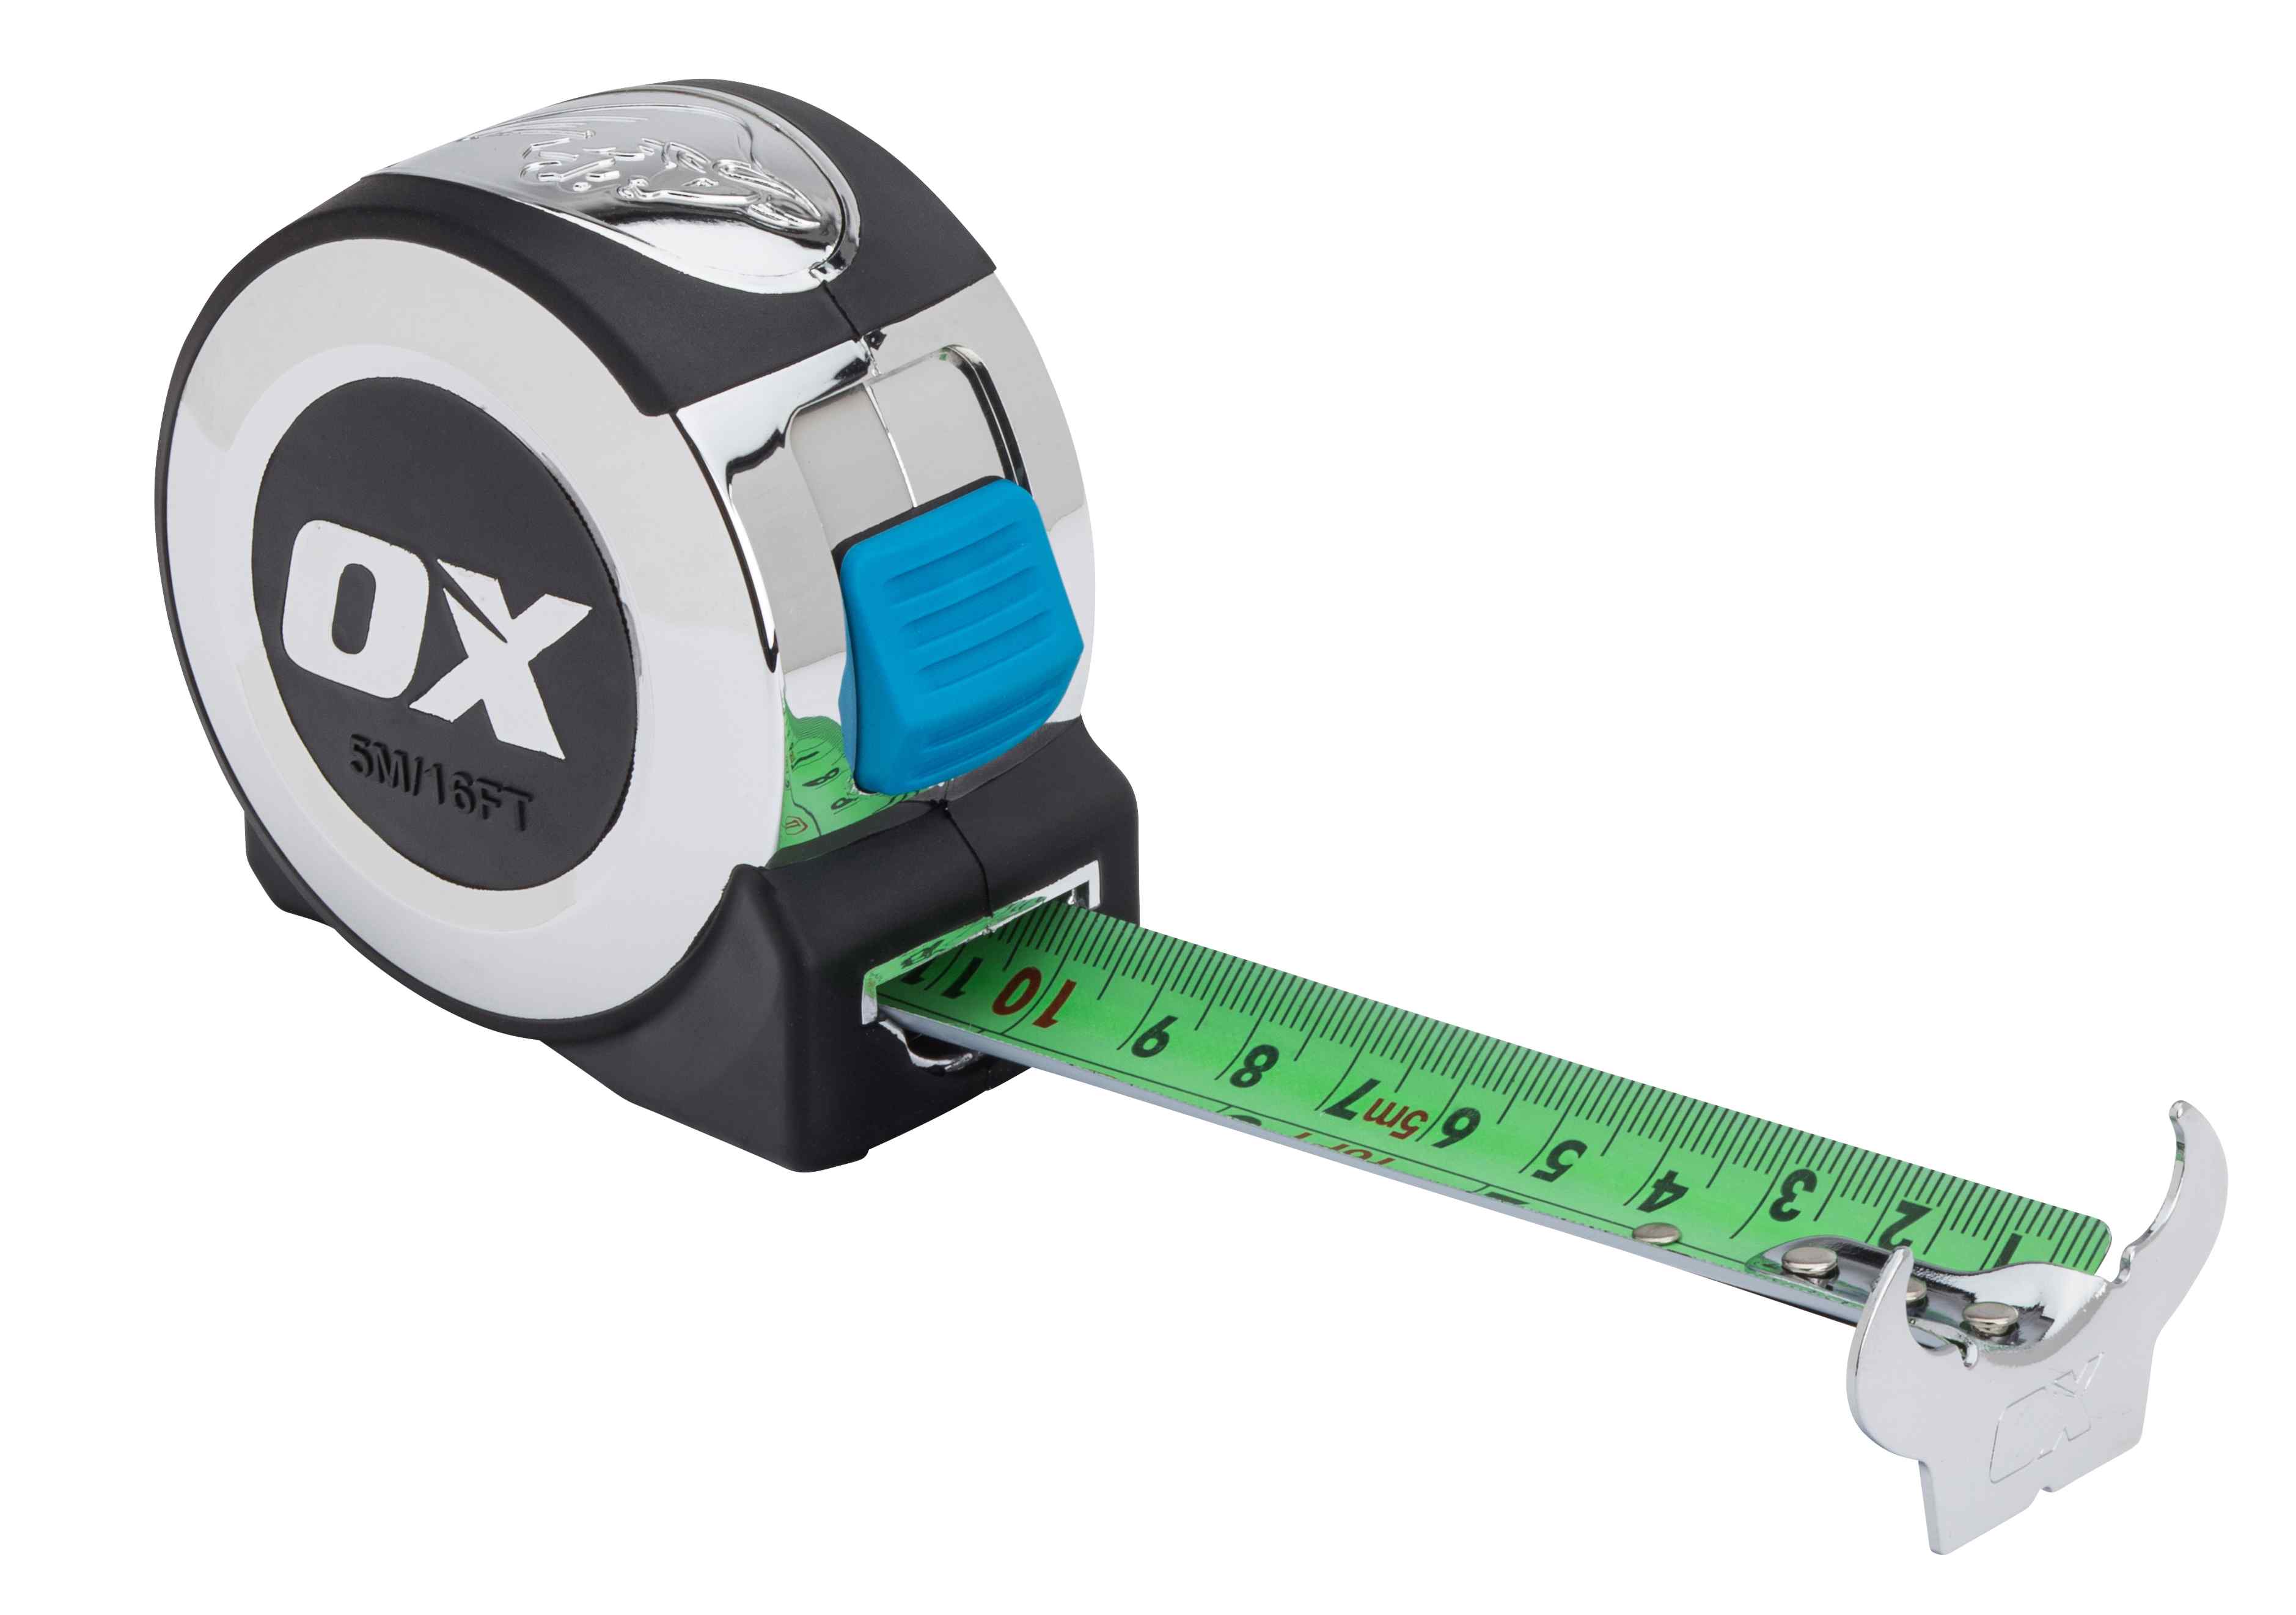 OX Pro 5m Tape Measure